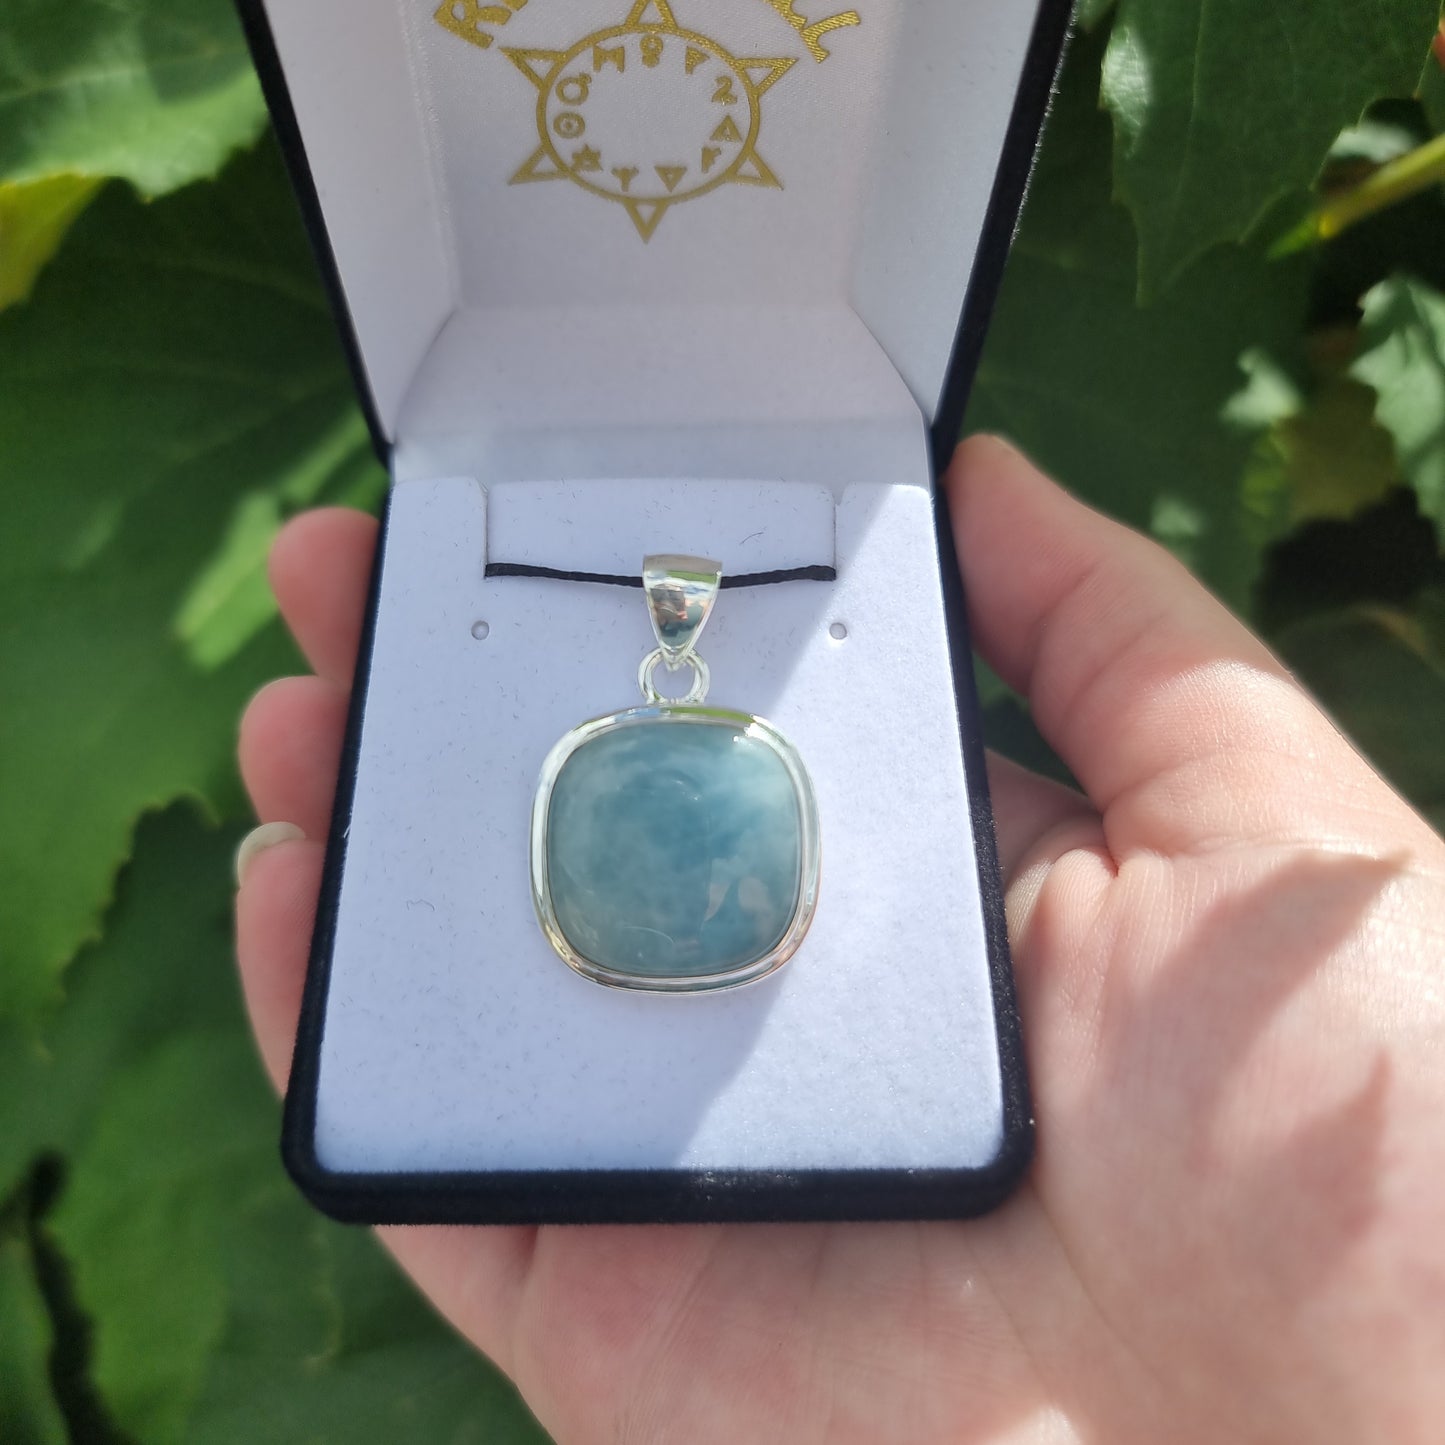 Aquamarine pendant - Rivendell Shop